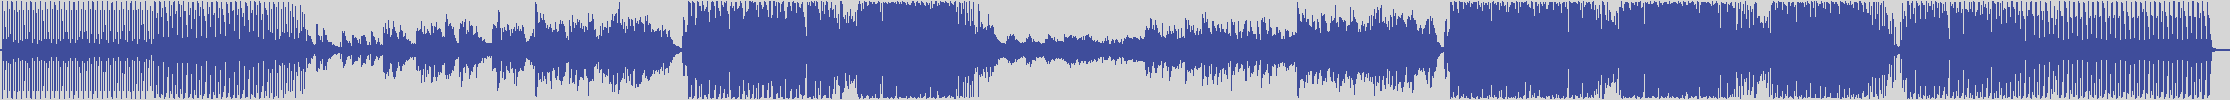 suxess [SX013] Dankann - Paralyzed [Extended Mix] audio wave form